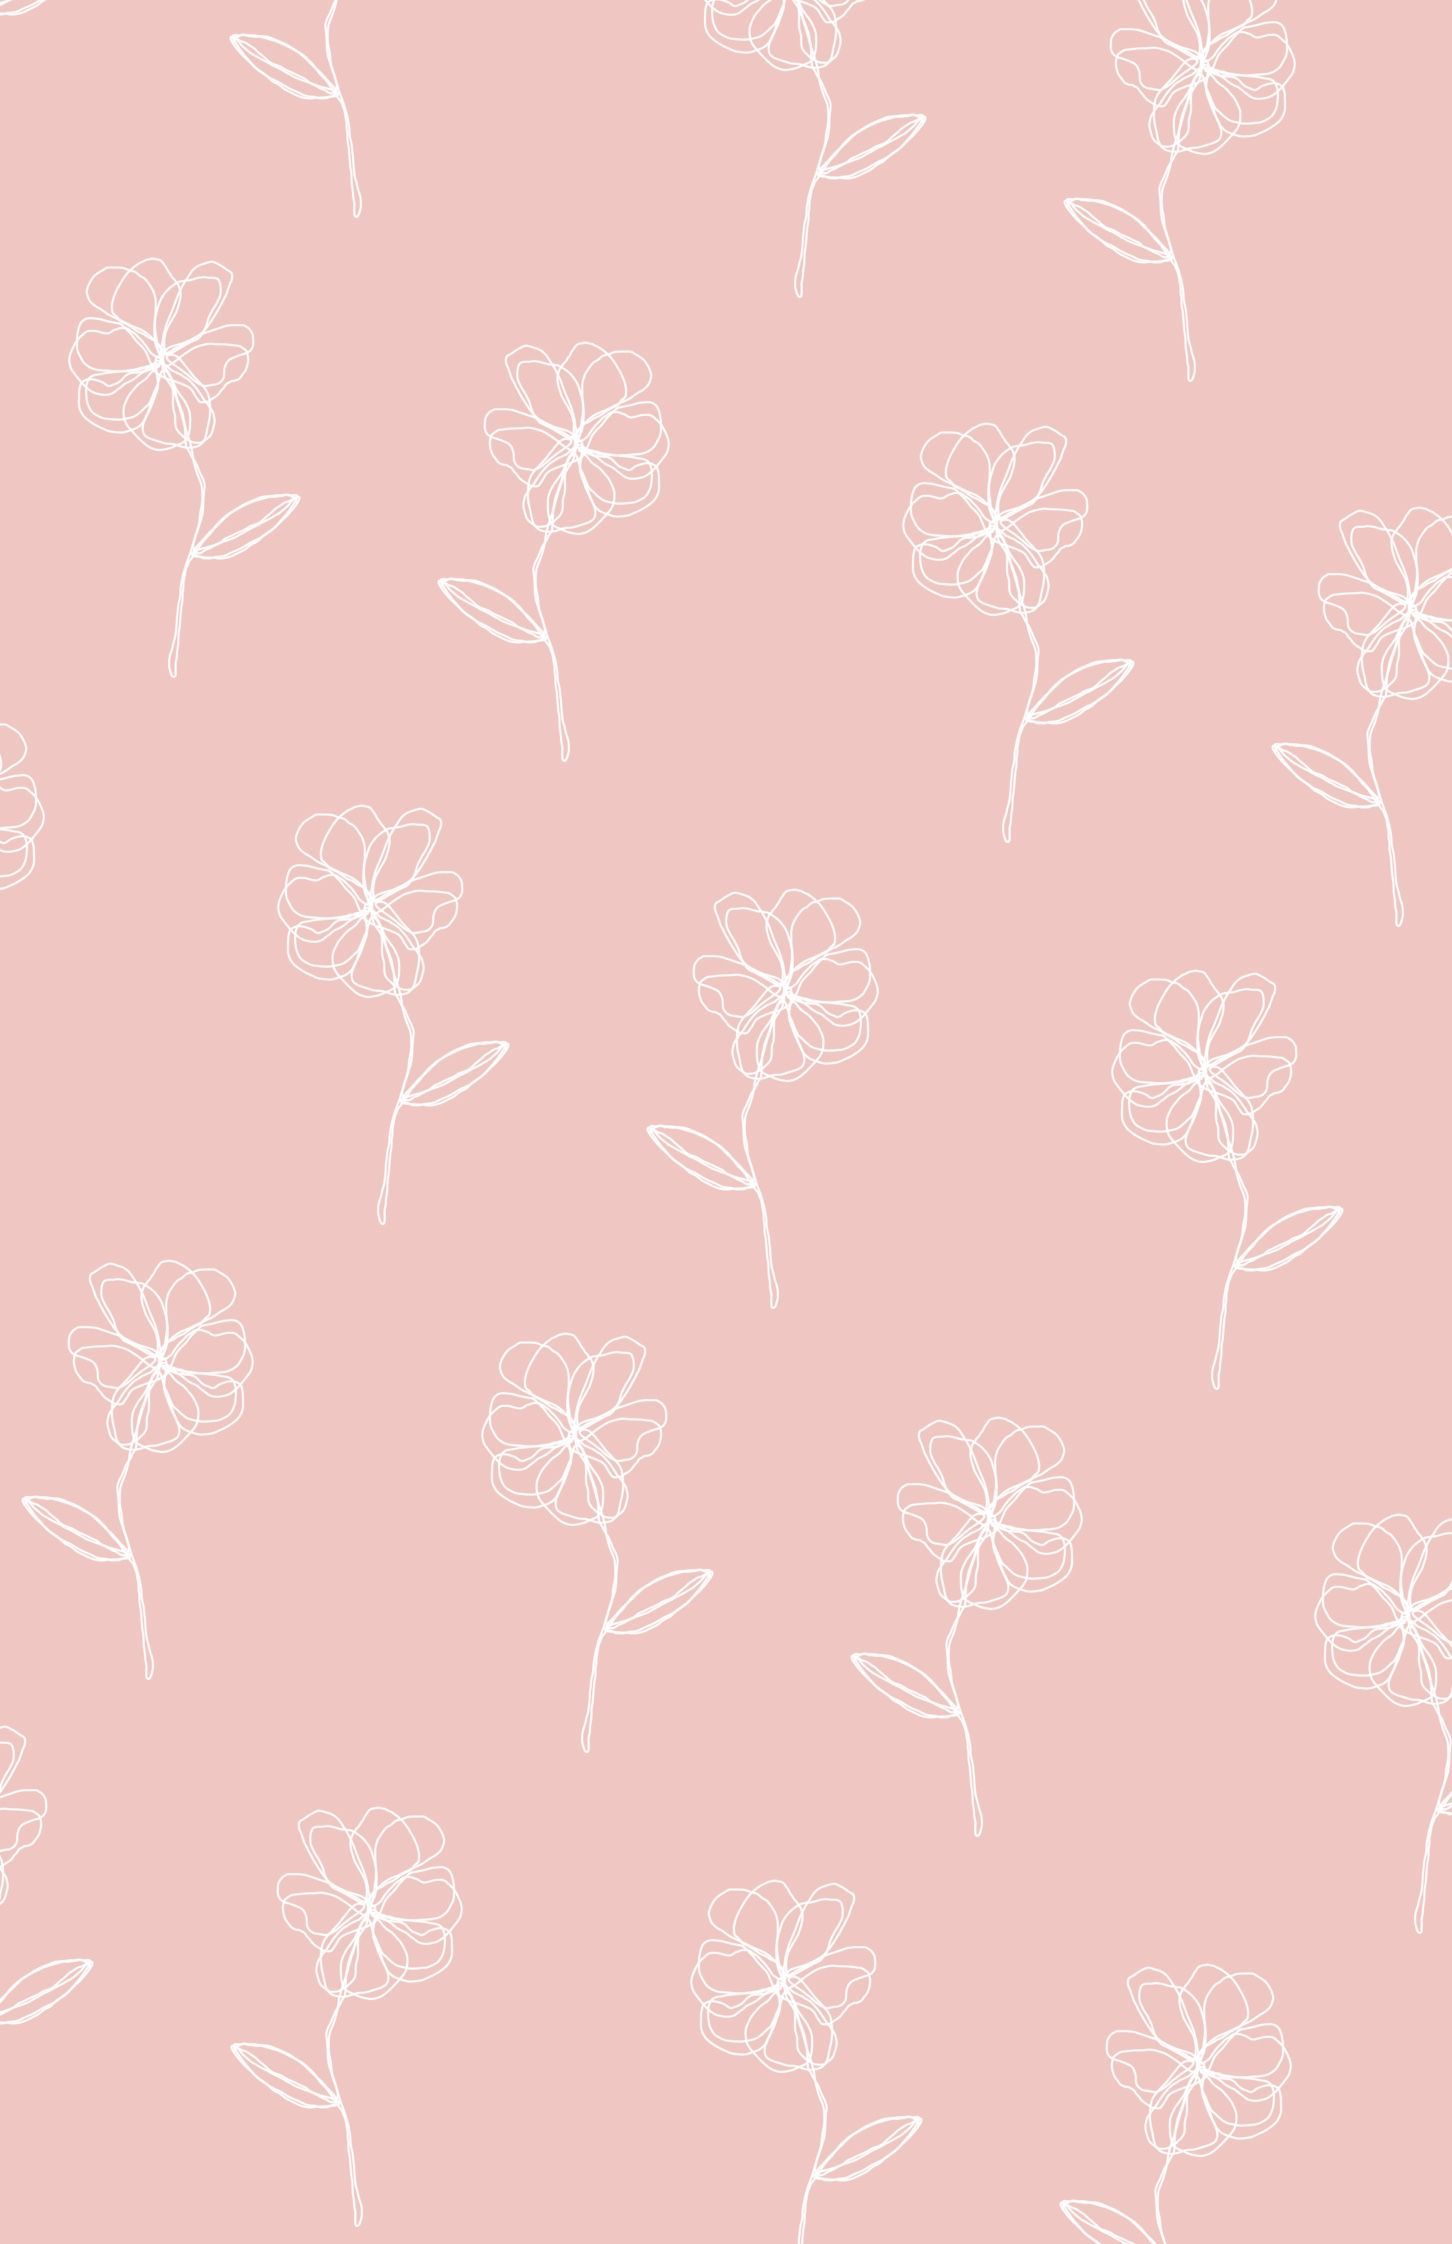 Prints By Rachael Pink Floral. Flower iphone wallpaper, Wallpaper, Free wallpaper